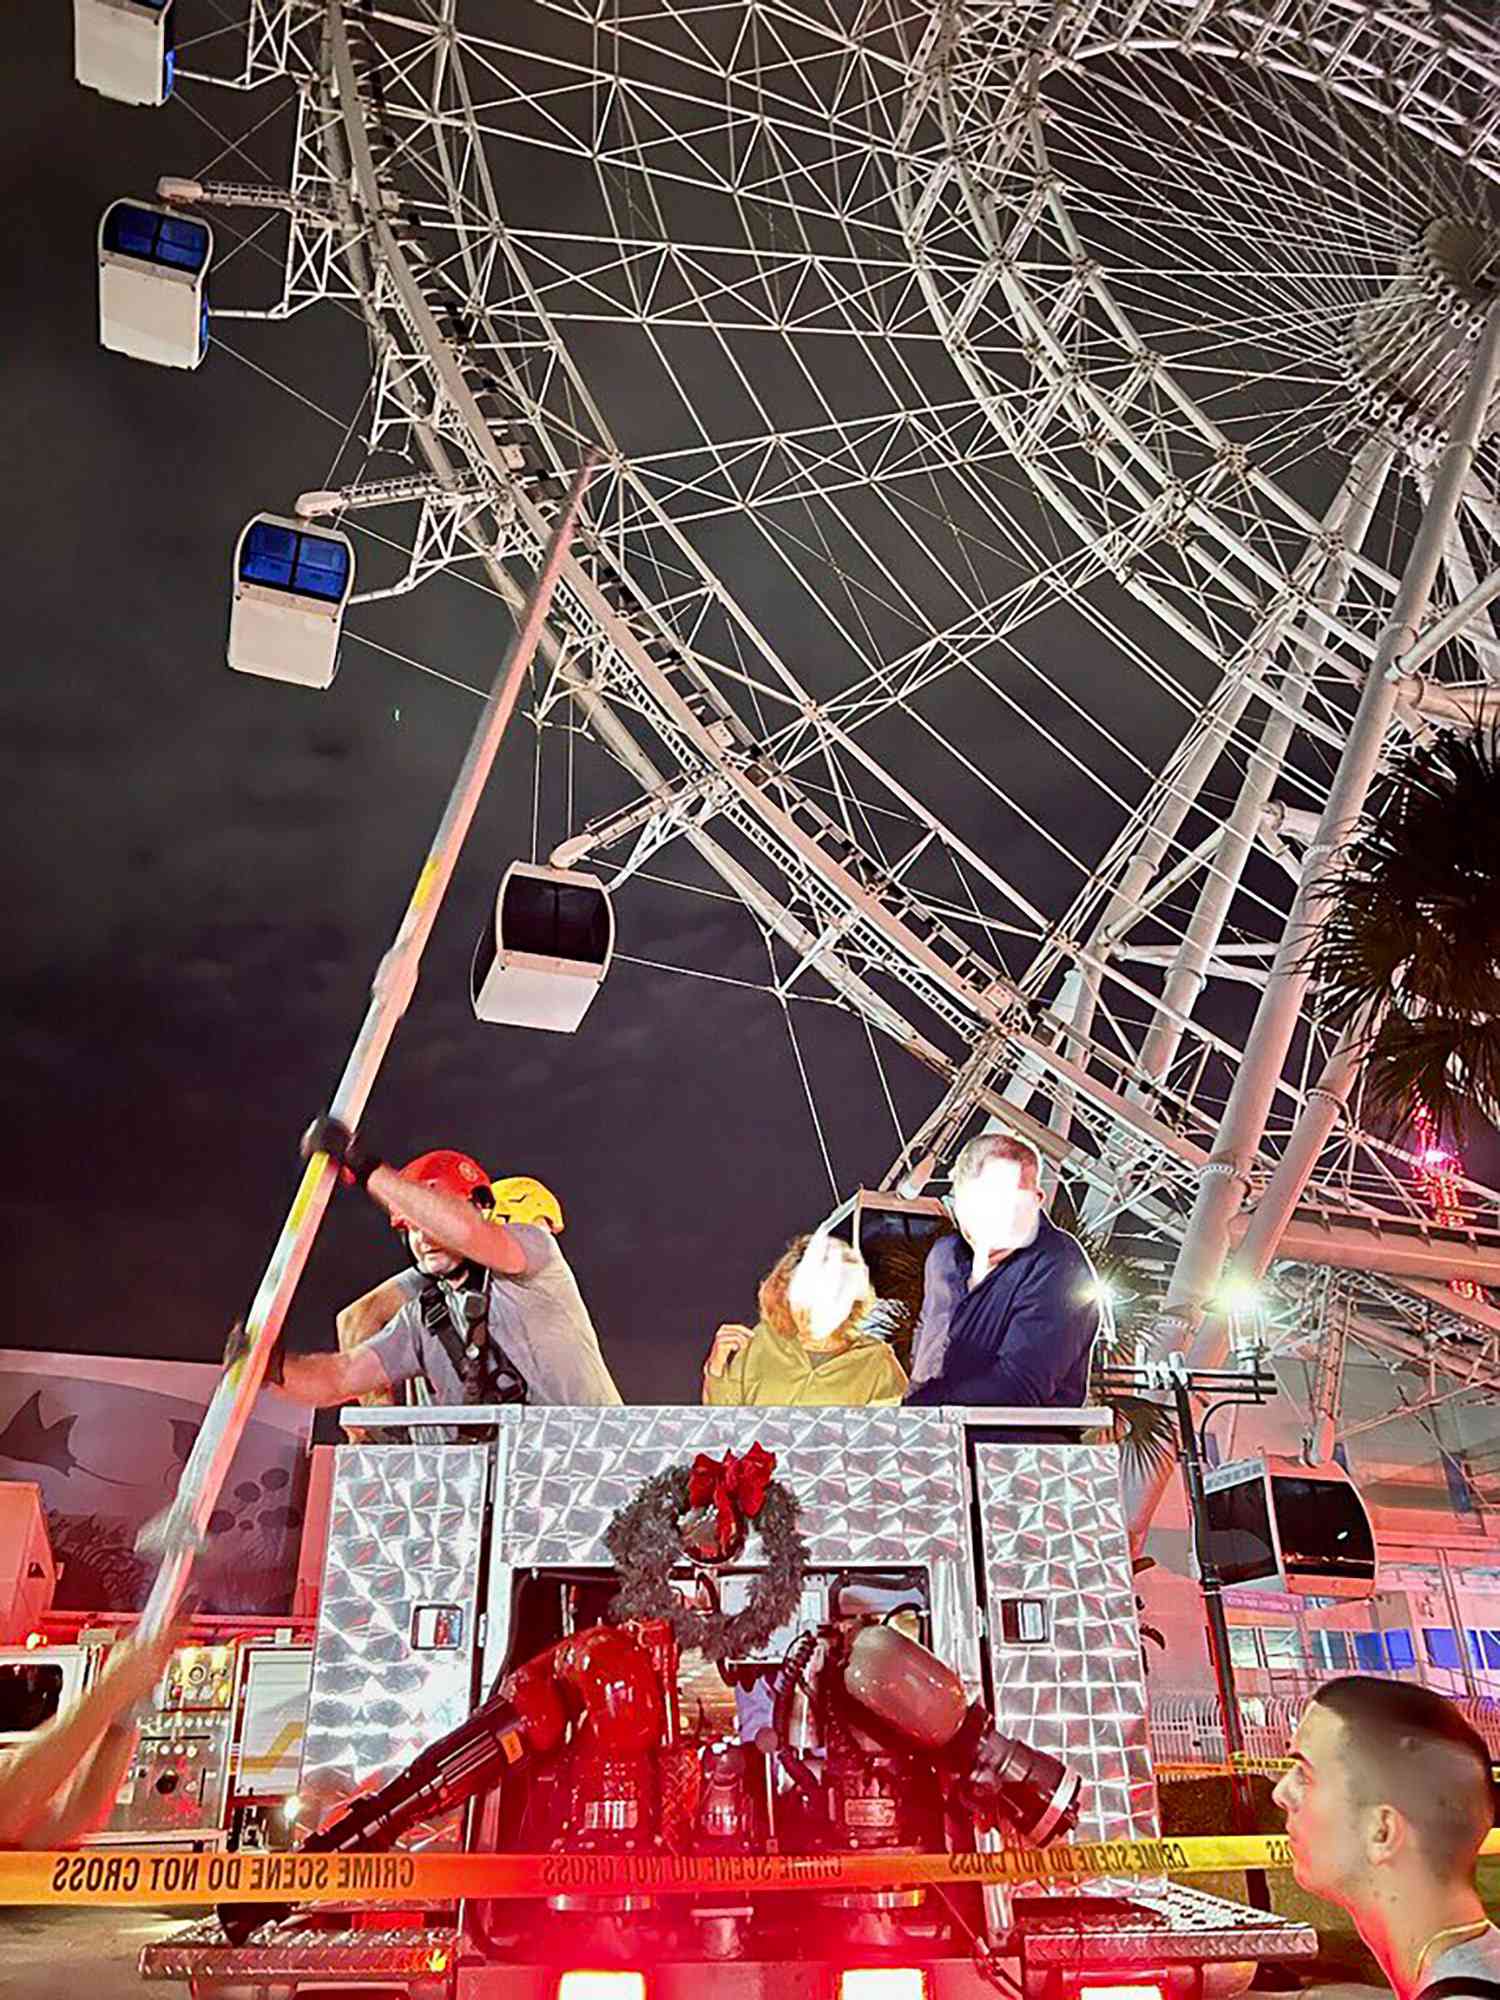 Man Bravely Rescues Girl Dangling from Ferris Wheel